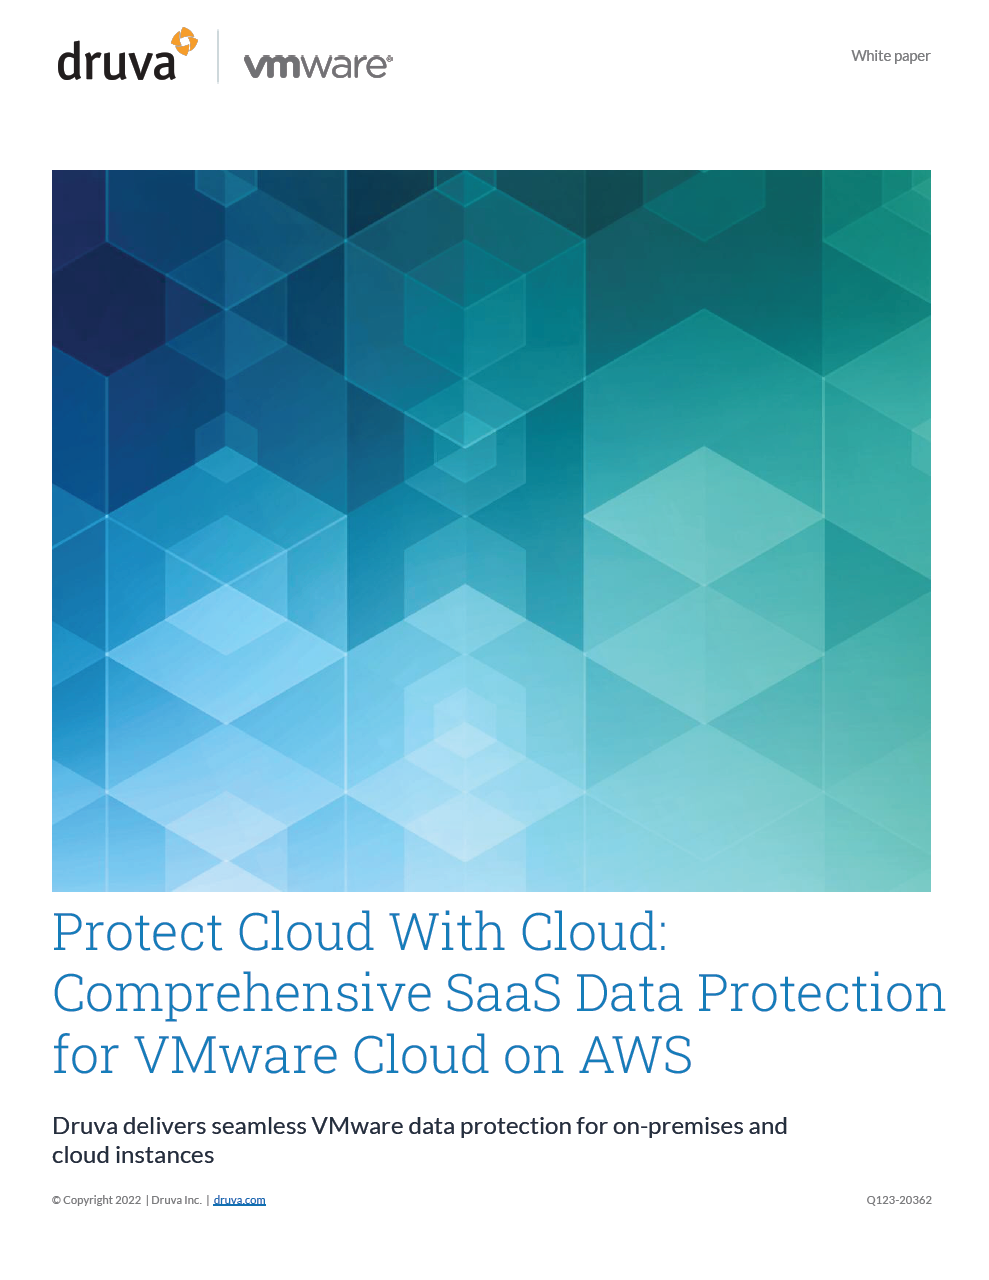 Comprehensive SaaS Data Protection for VMware Cloud on AWS